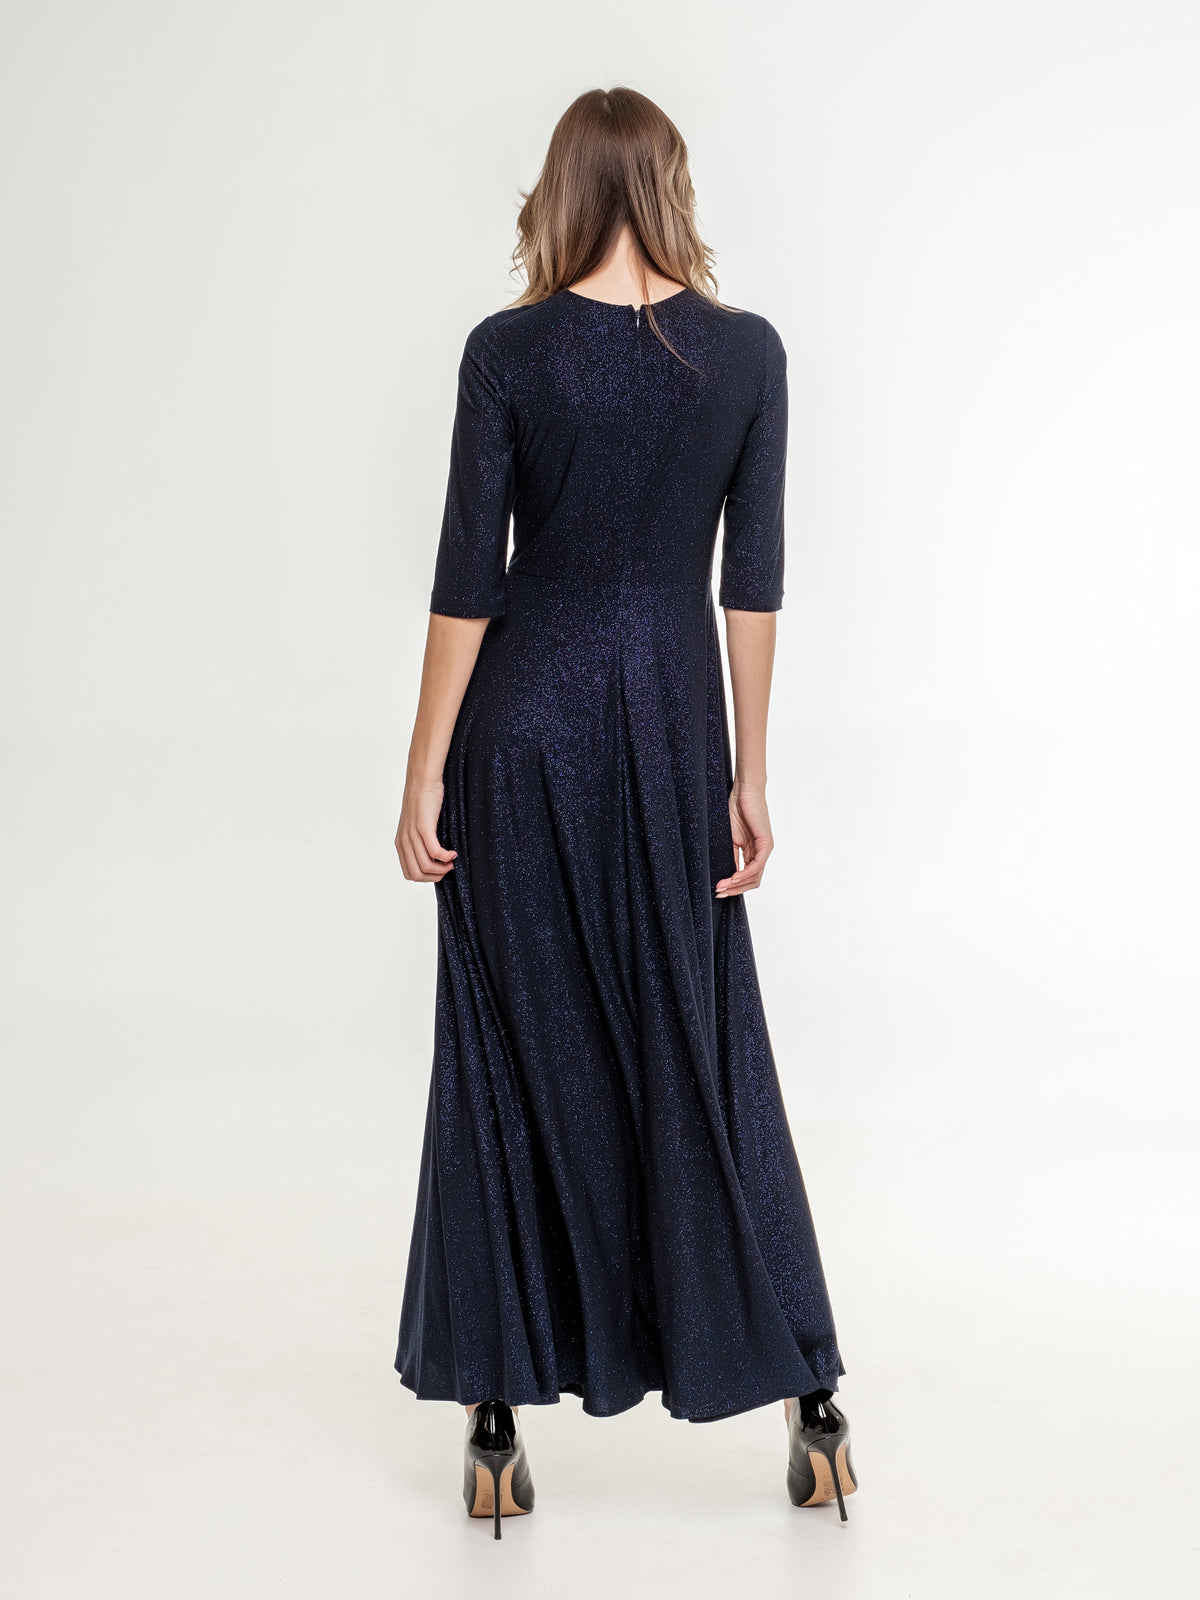 dark blue glittery long dress with back zipper